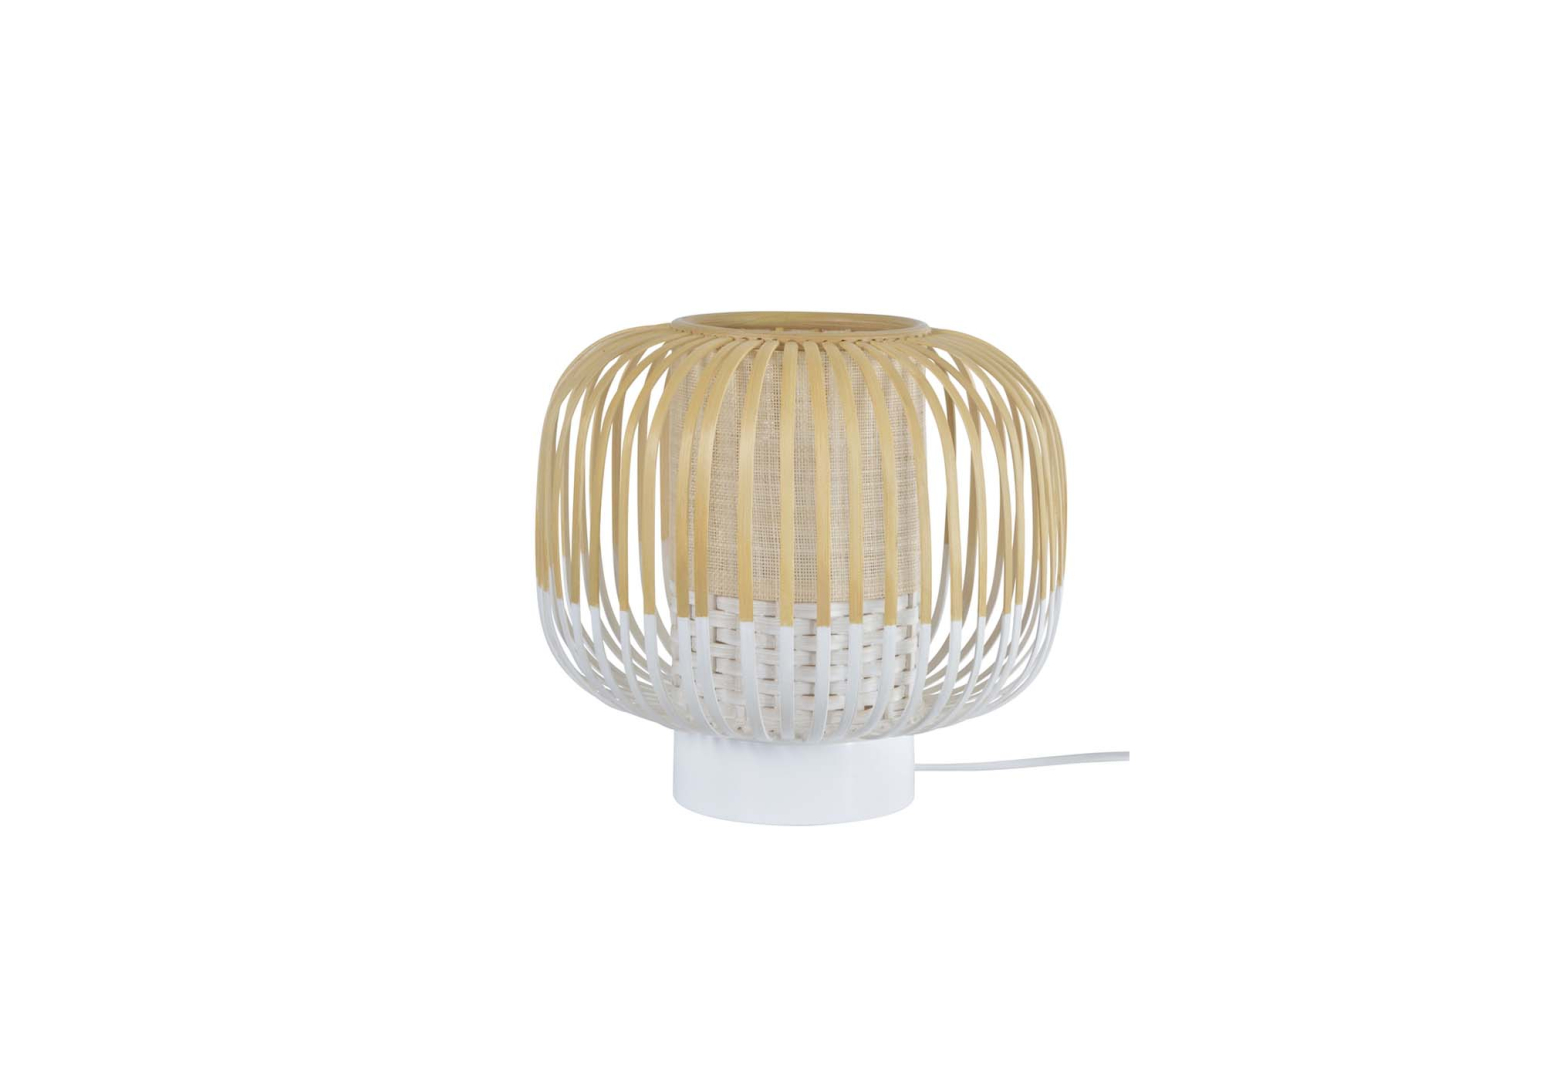 Lampe bamboo light - FORESTIER